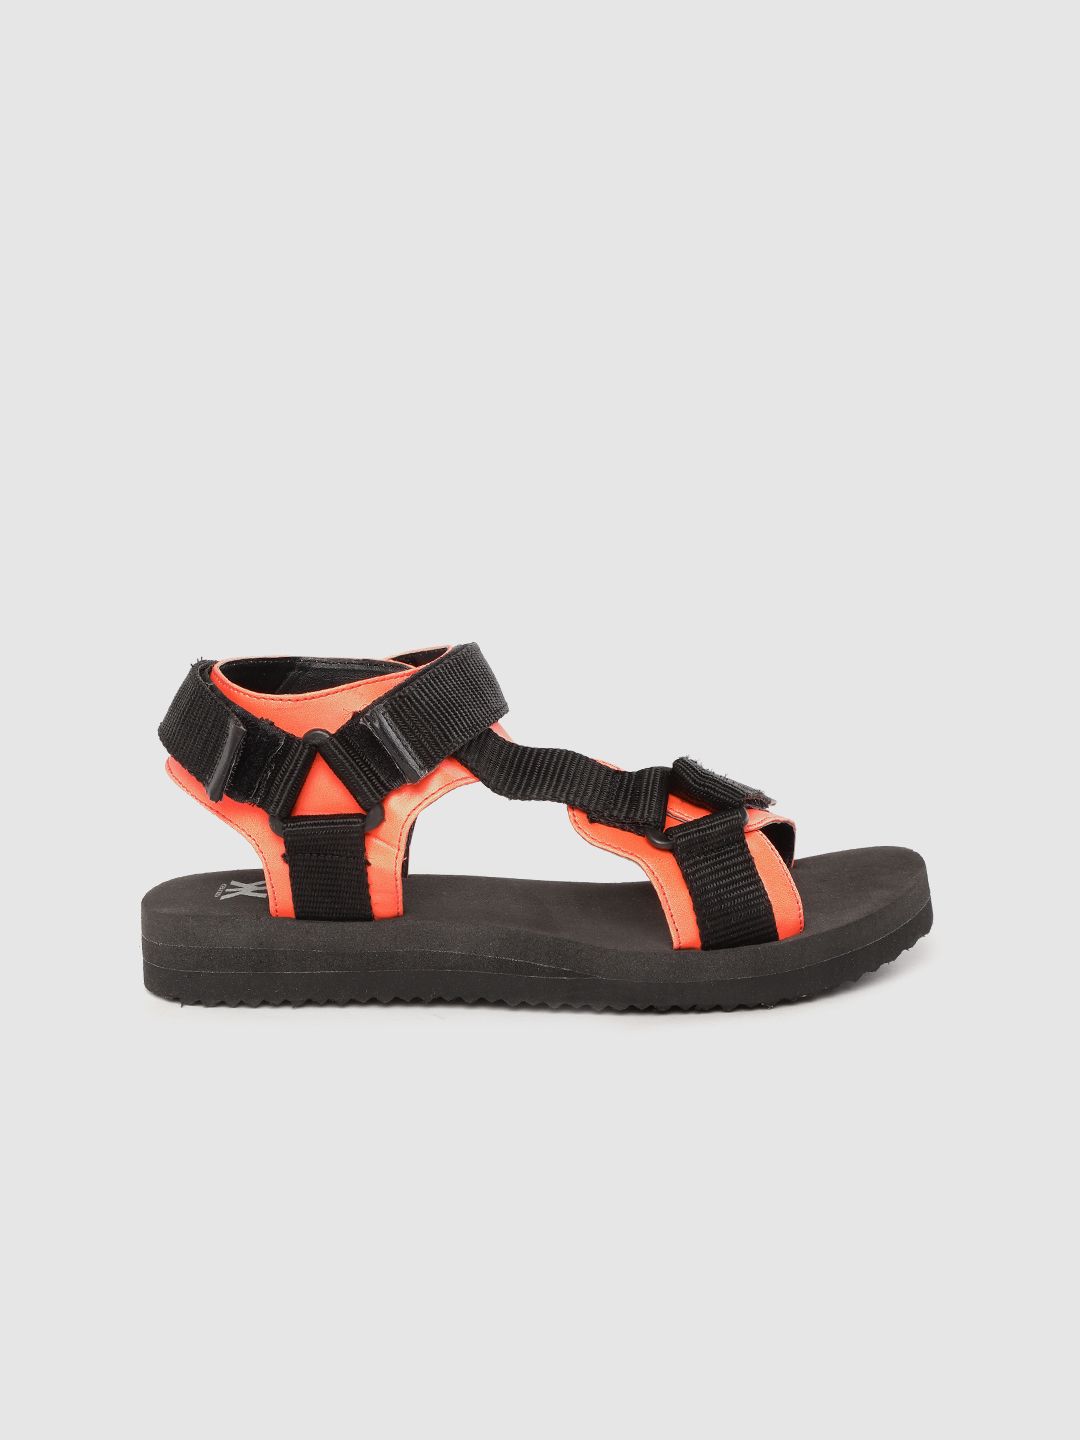 Kook N Keech Women Black & Orange Colourblocked Sports Sandals Price in India